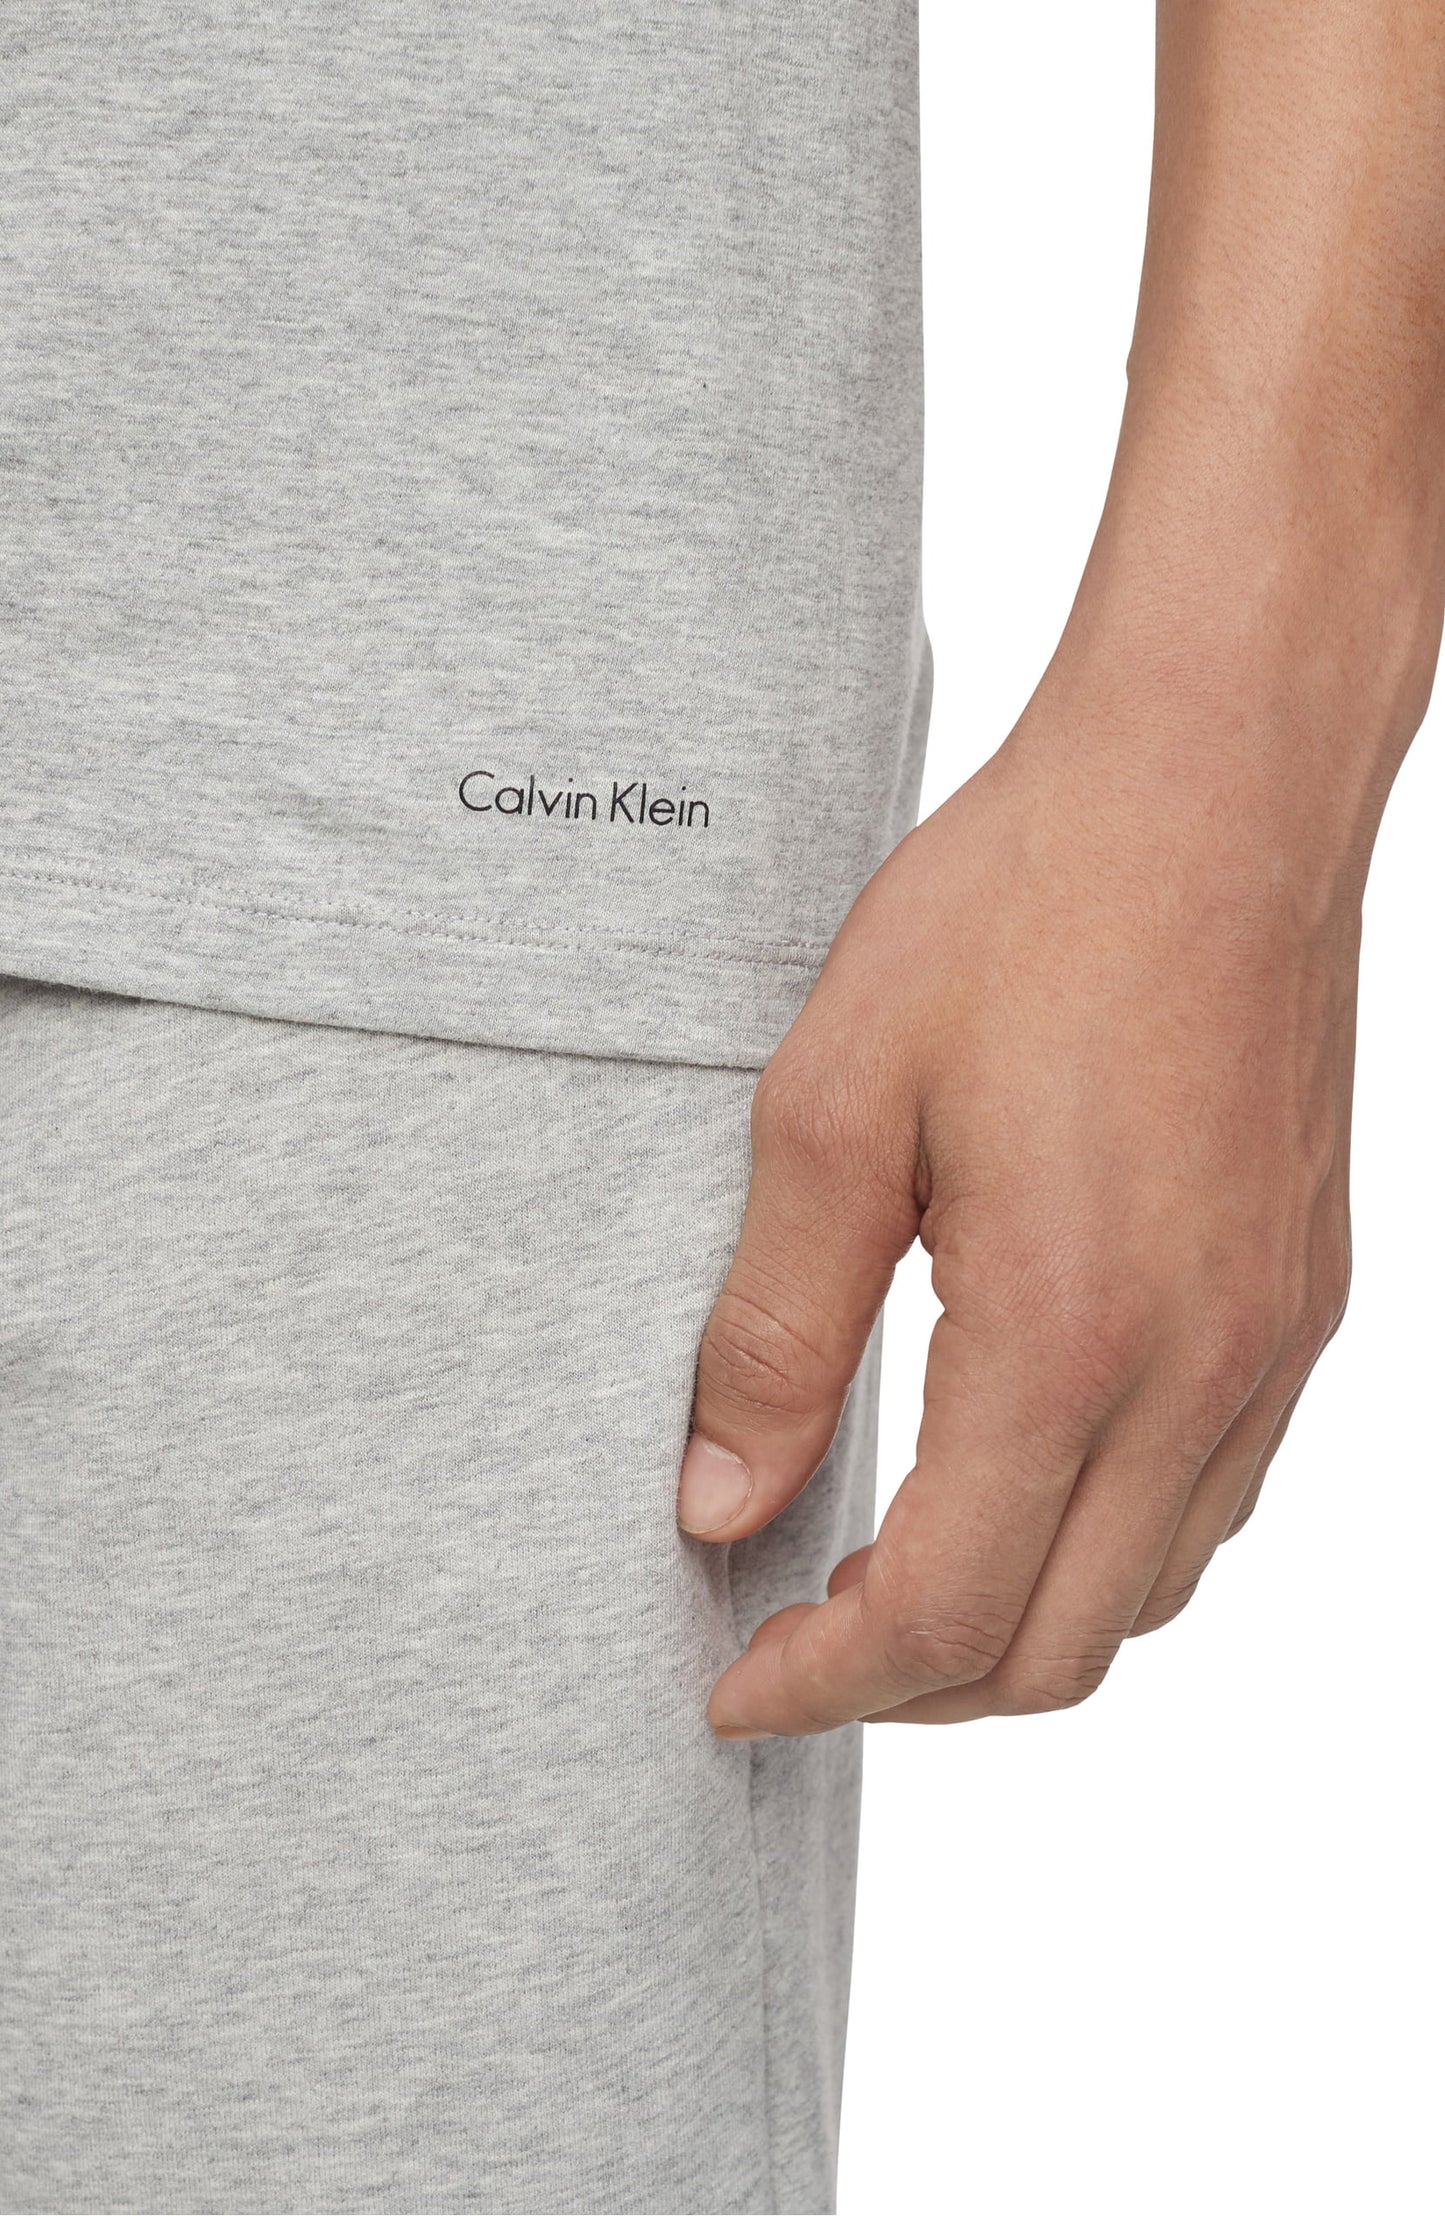 Calvin Klein Cotton Stretch 3 Pack Boxer Briefs White (NU2666-165) –  Rafaelos